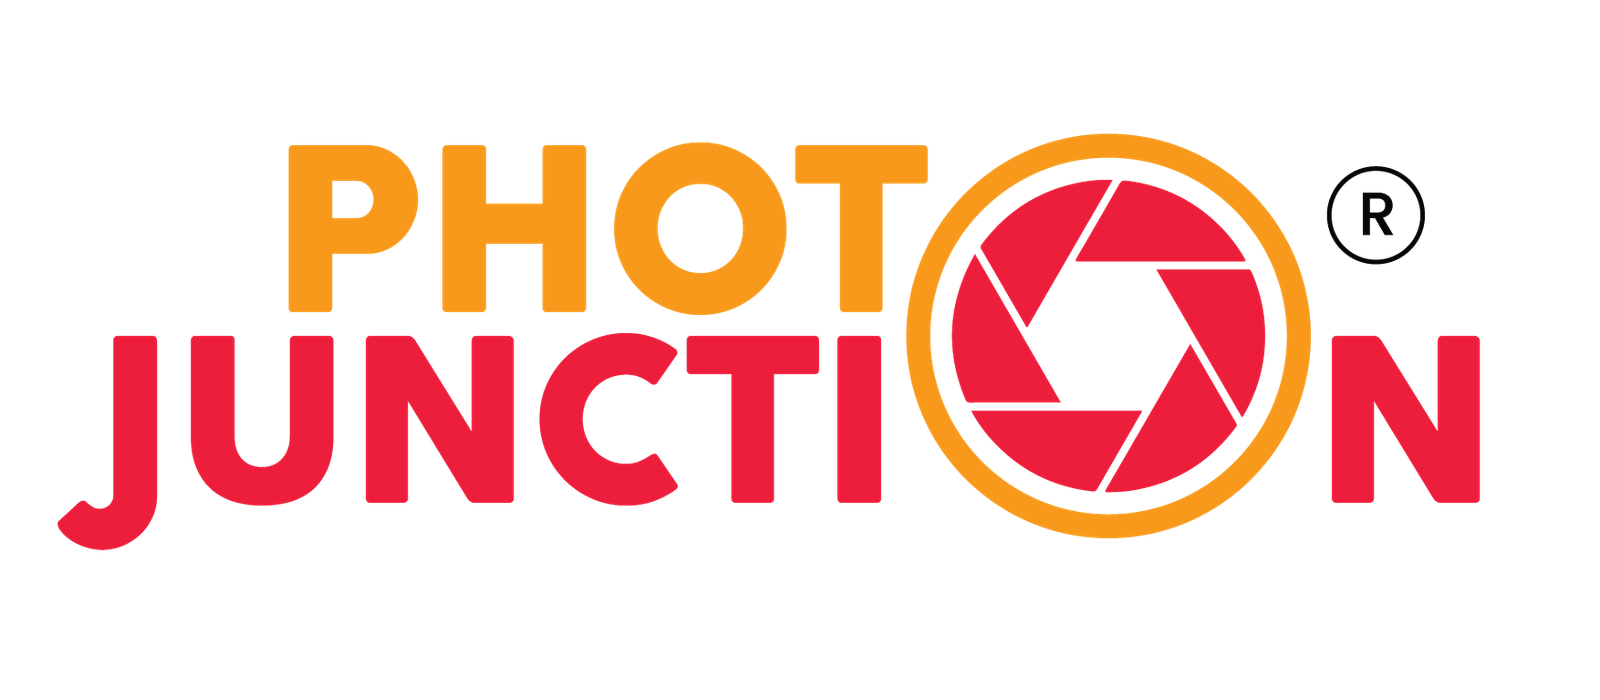 photojunction resistered logo-01